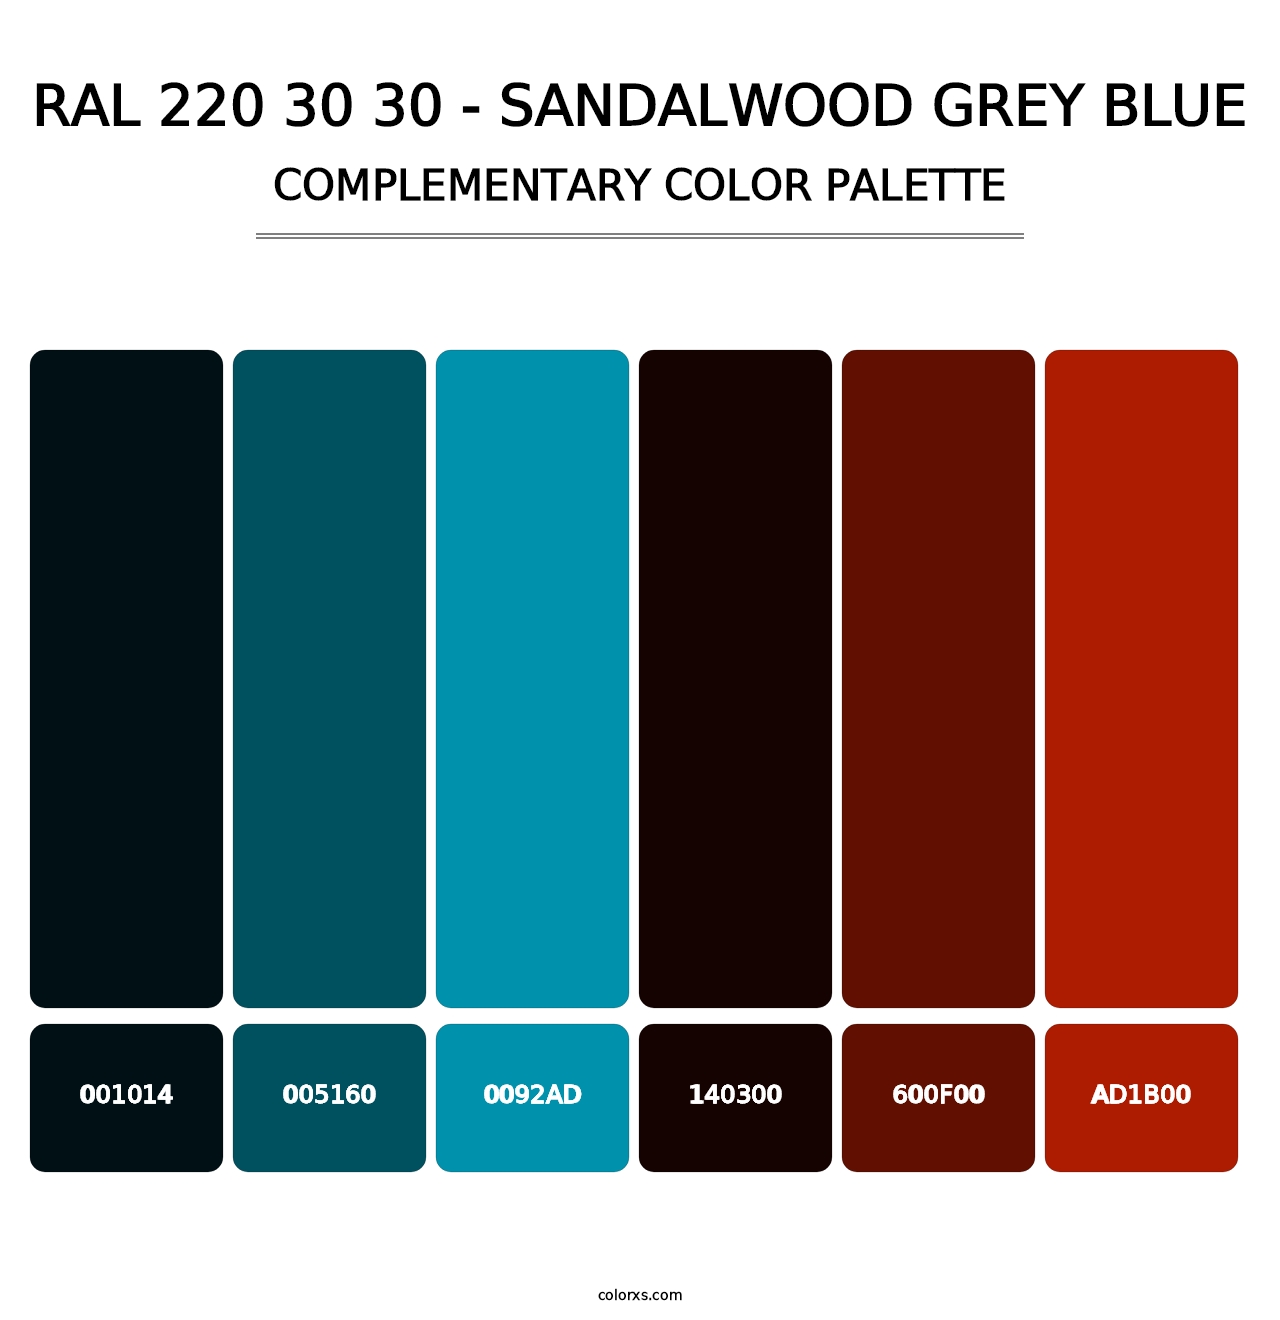 RAL 220 30 30 - Sandalwood Grey Blue - Complementary Color Palette